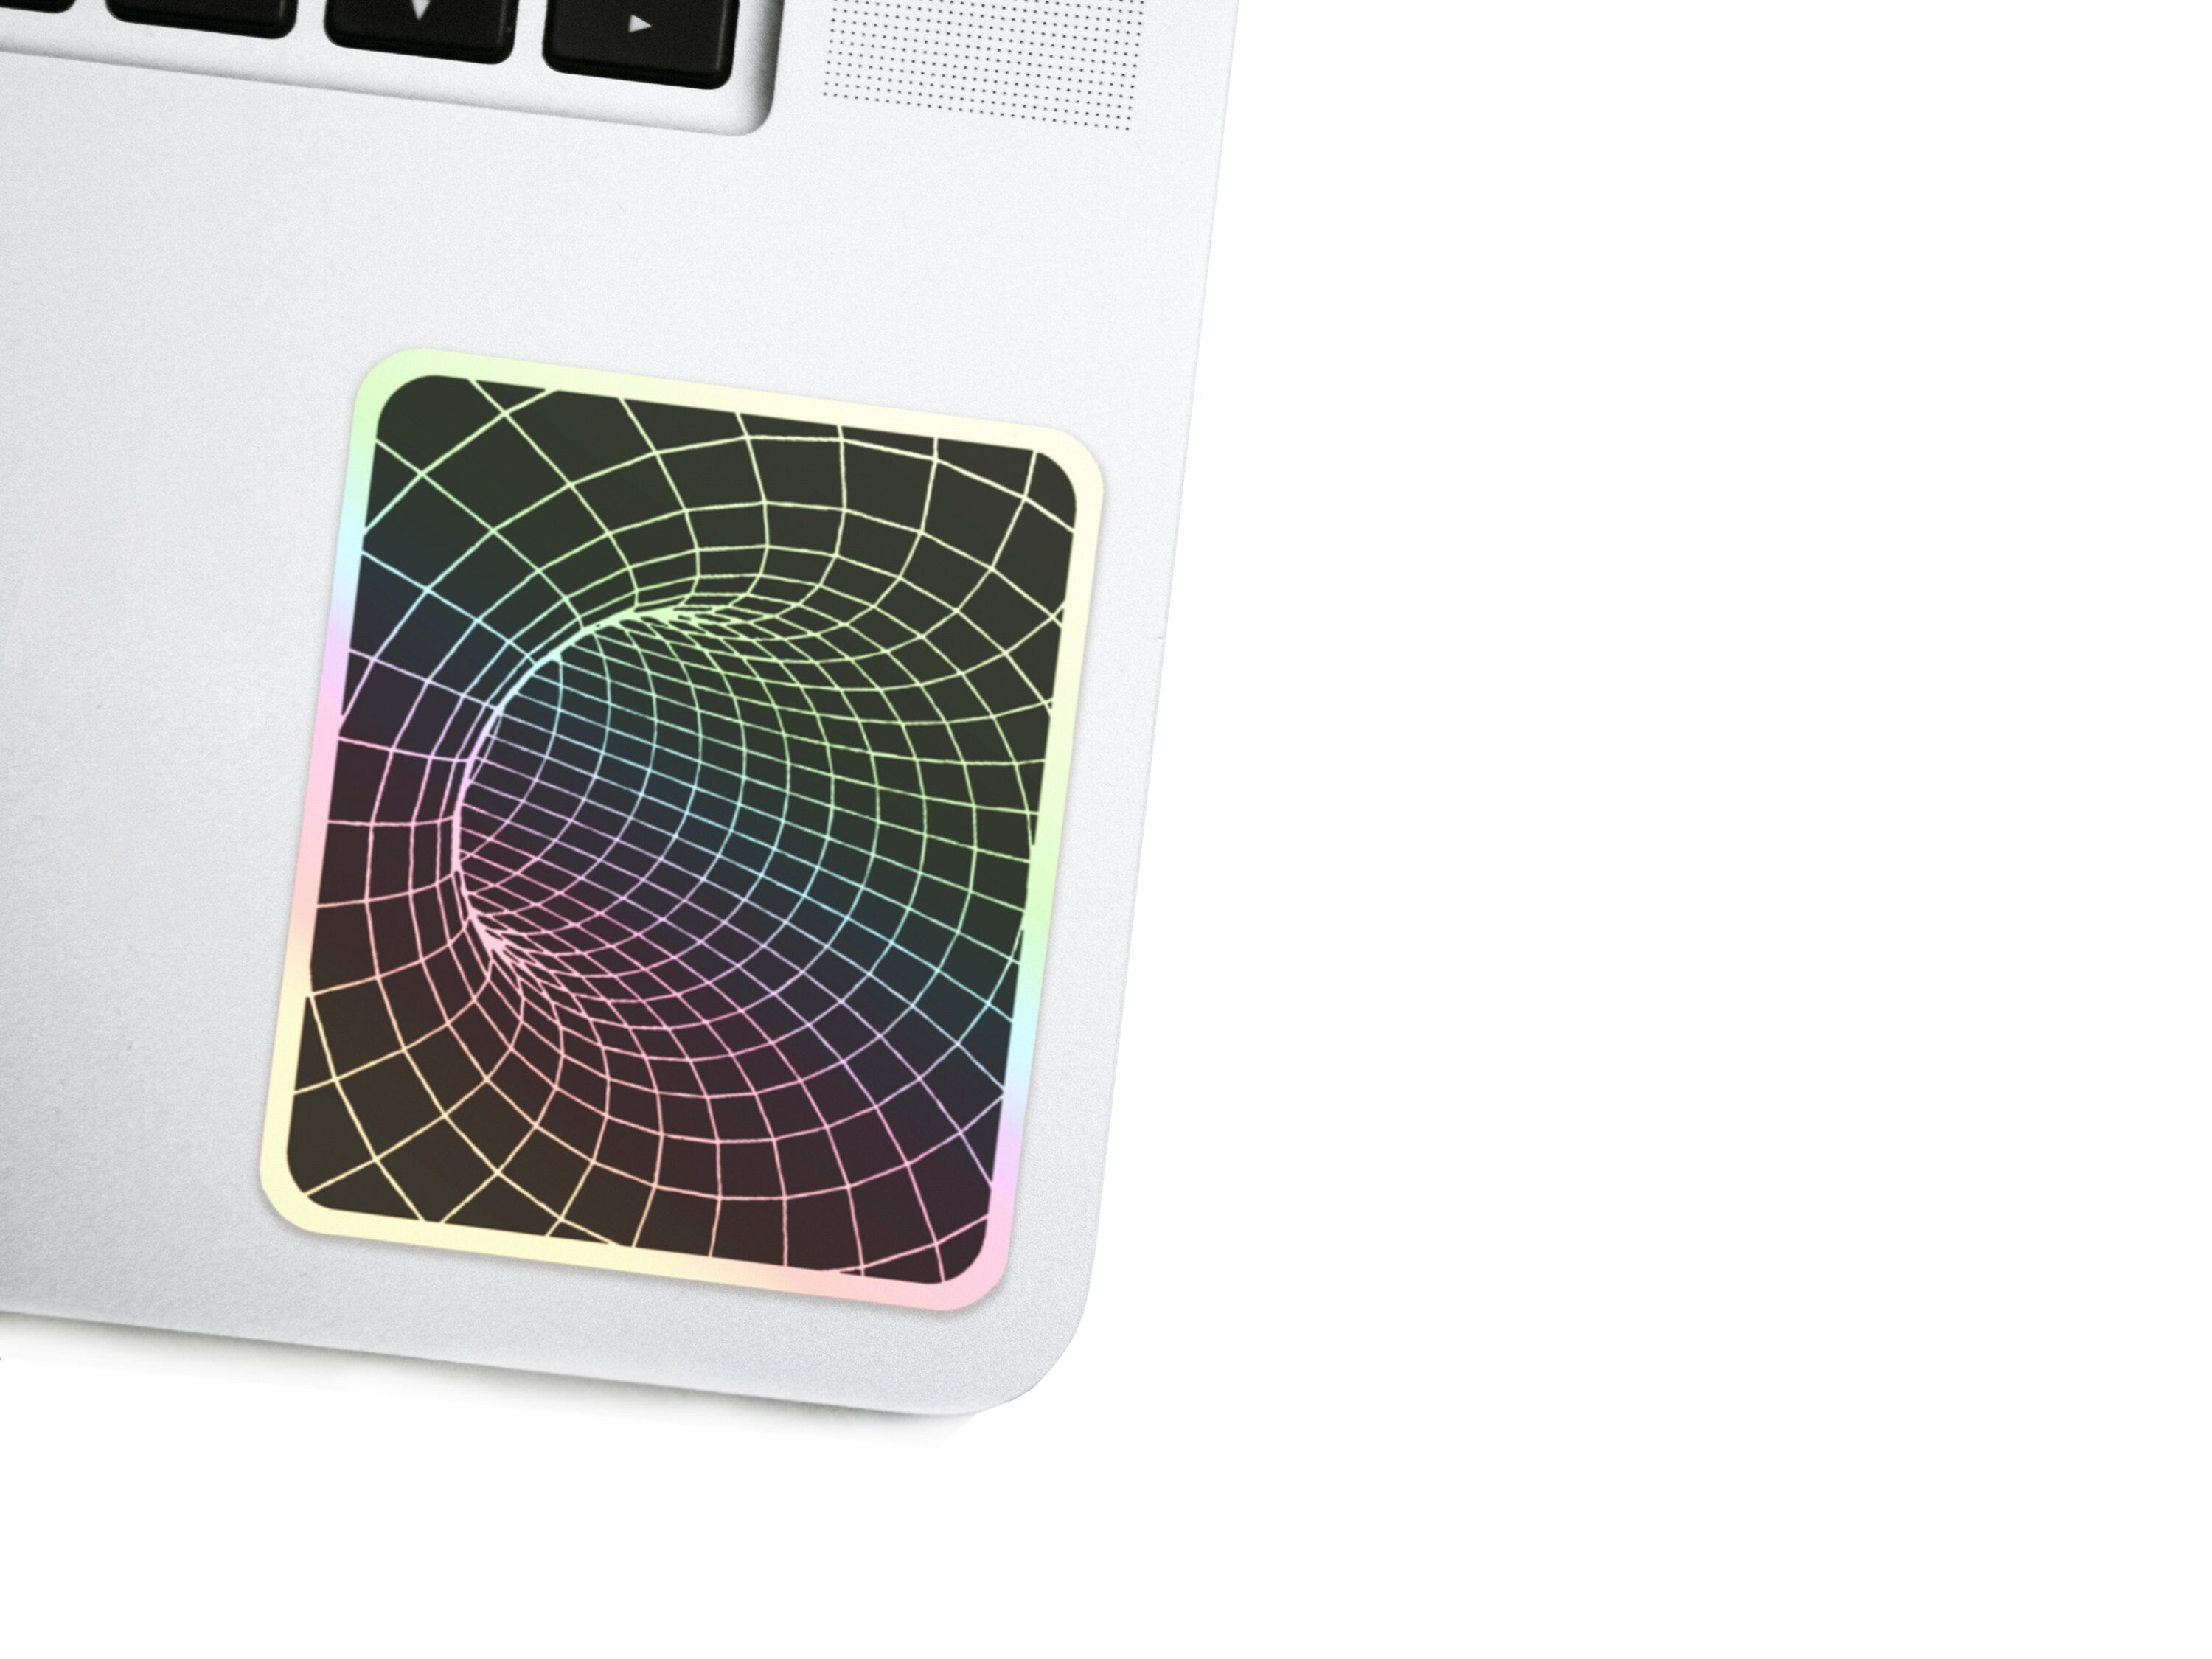 Event Horizon Holographic Vinyl Decal - Cyberpunk Laptop Sticker - Futuristic Astronomy / Space Bumper Sticker